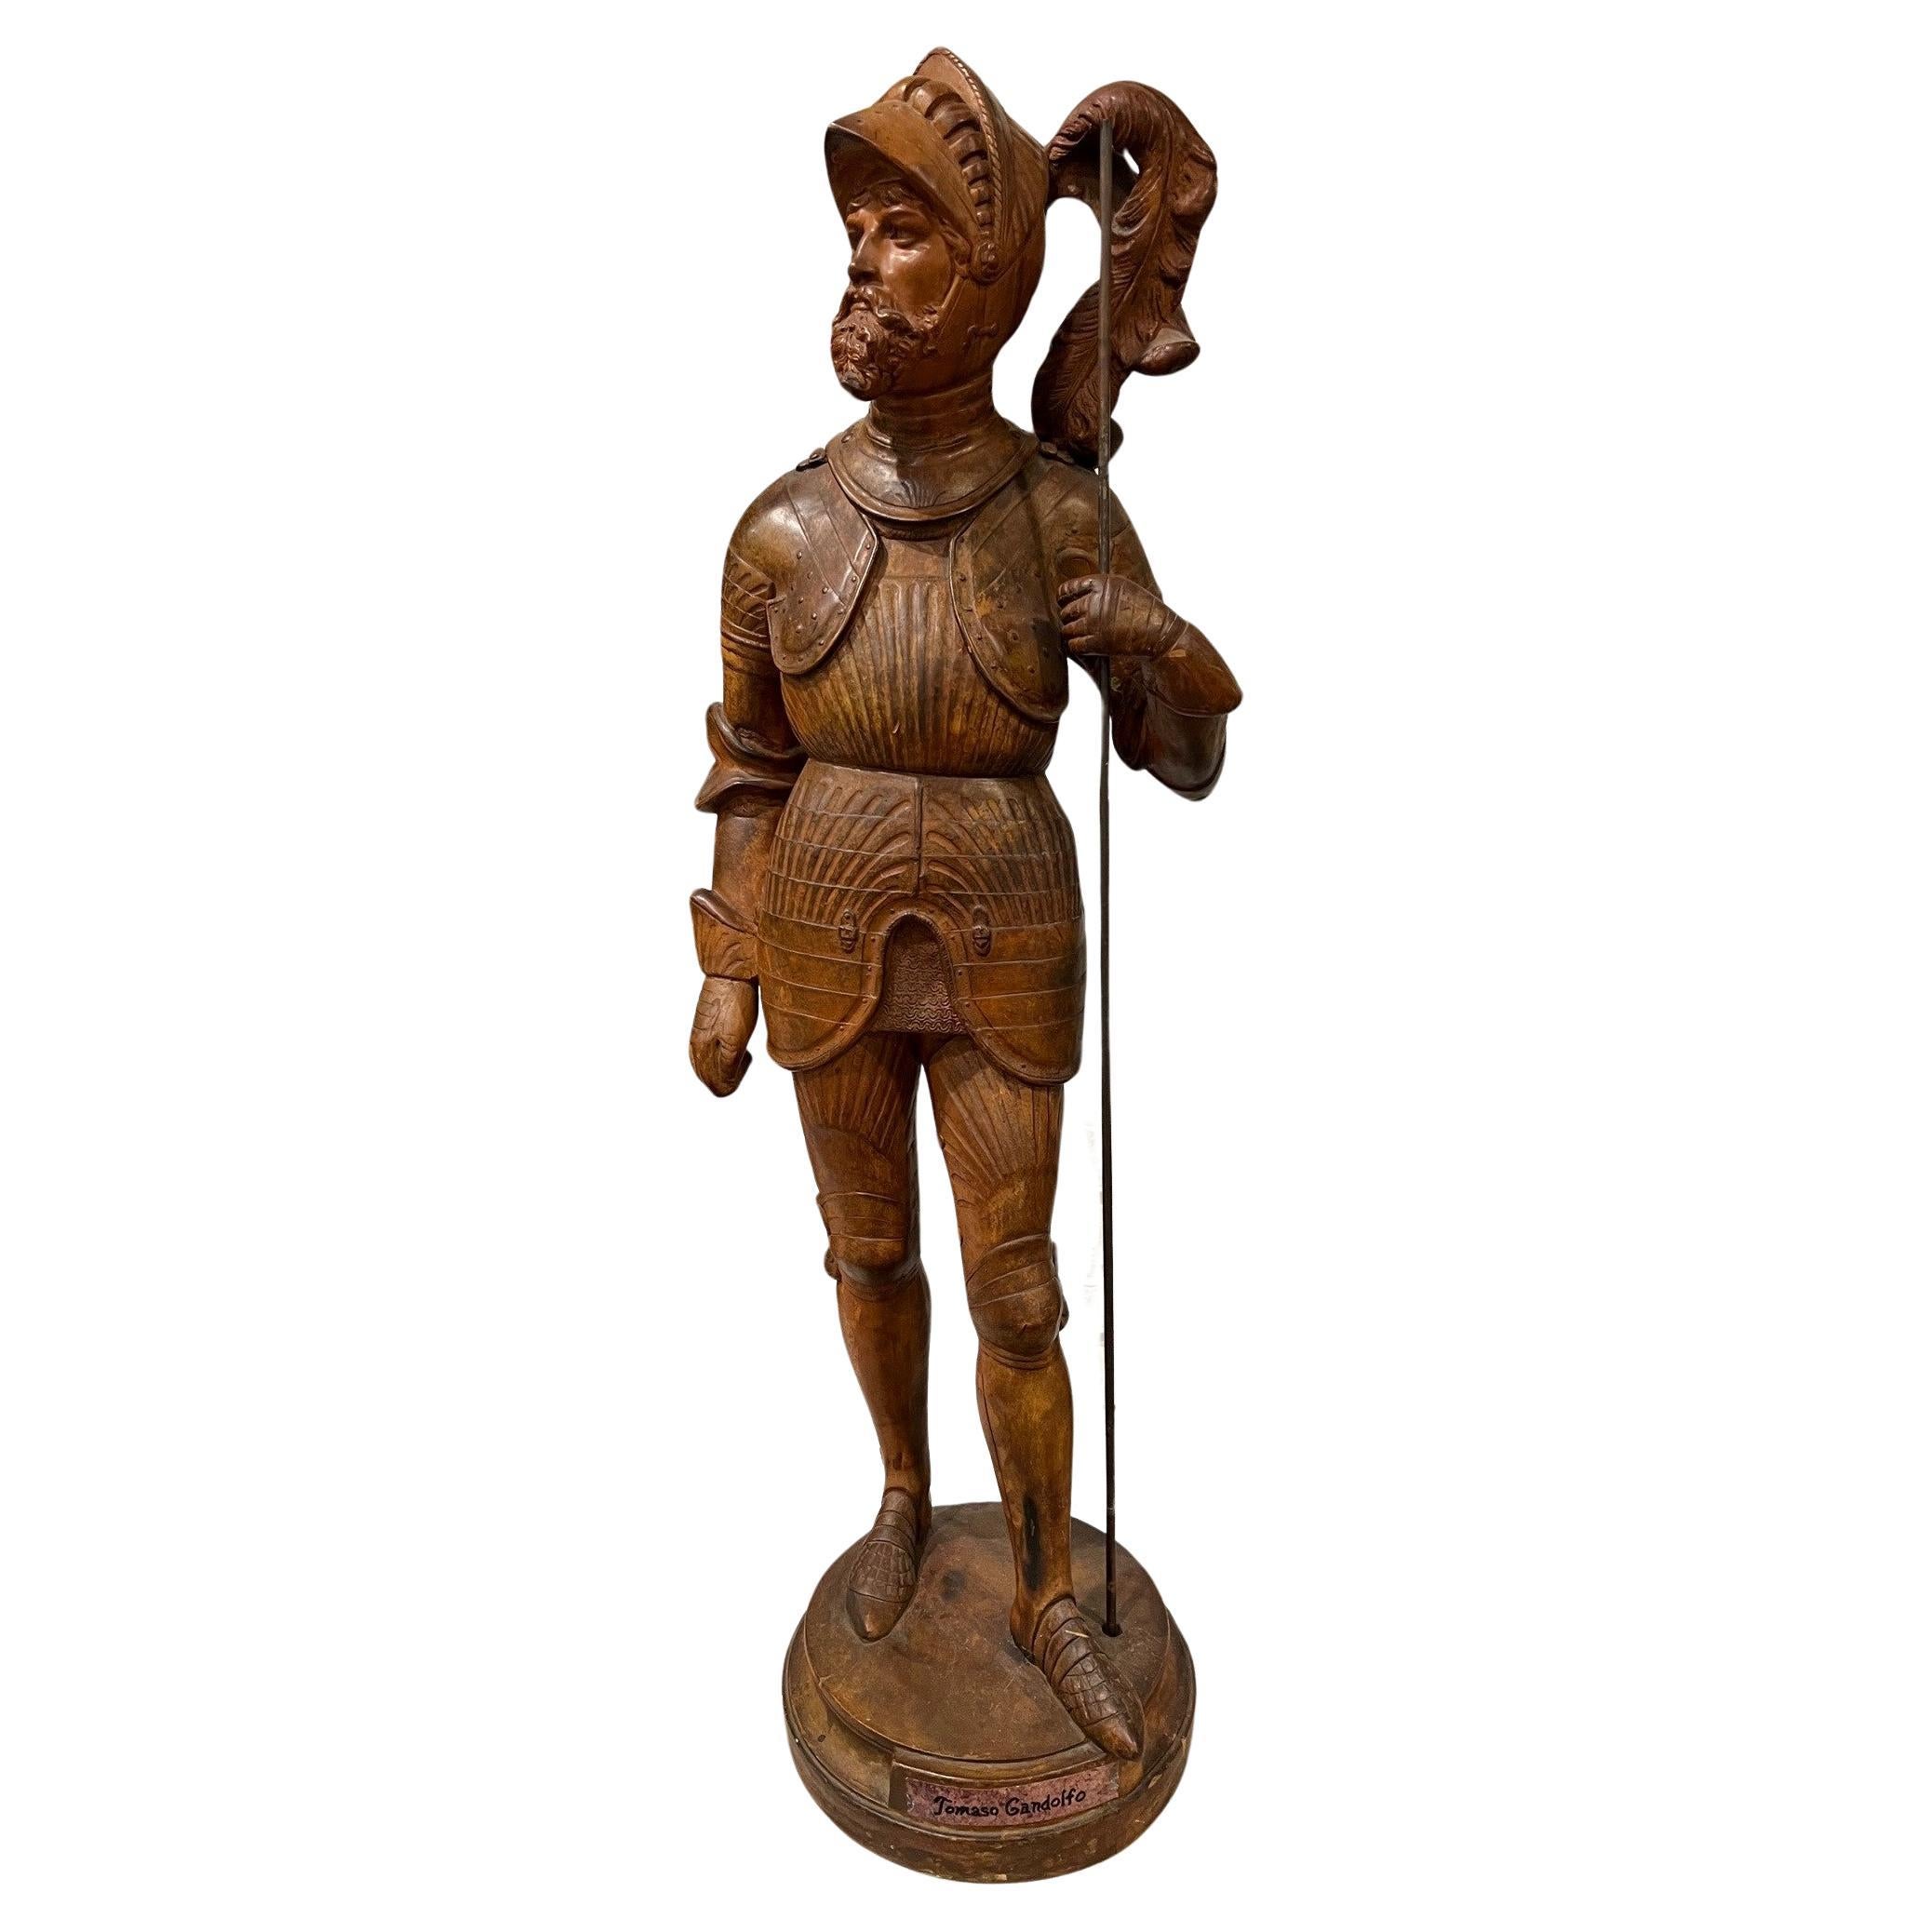 Vintage Terracotta Statue of a Knight in Armor Tomaso Gandolfo  